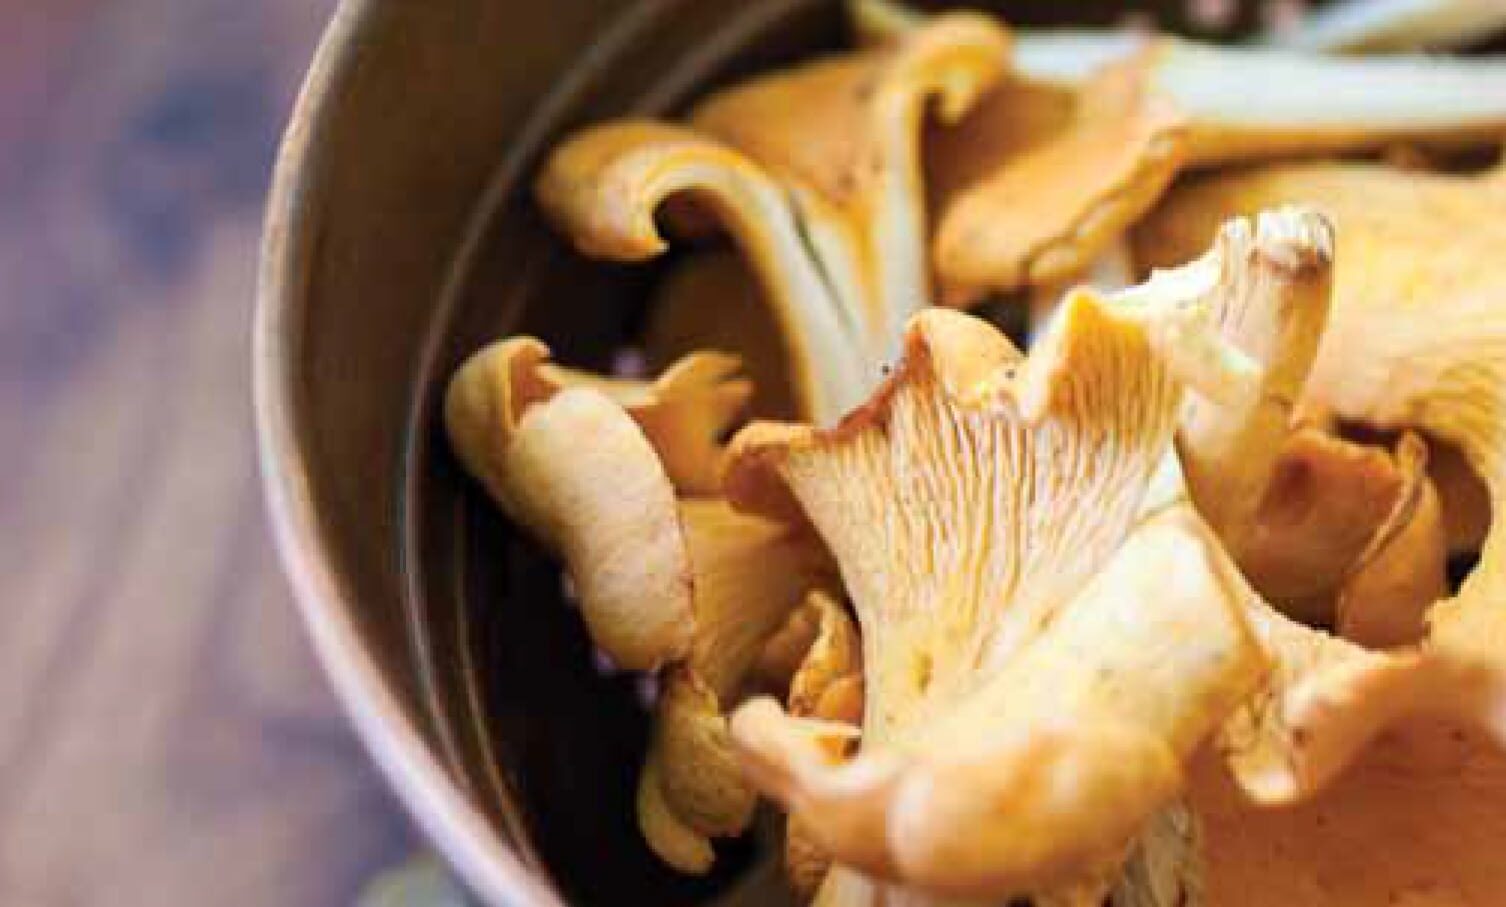 Chanterrelle Mushrooms